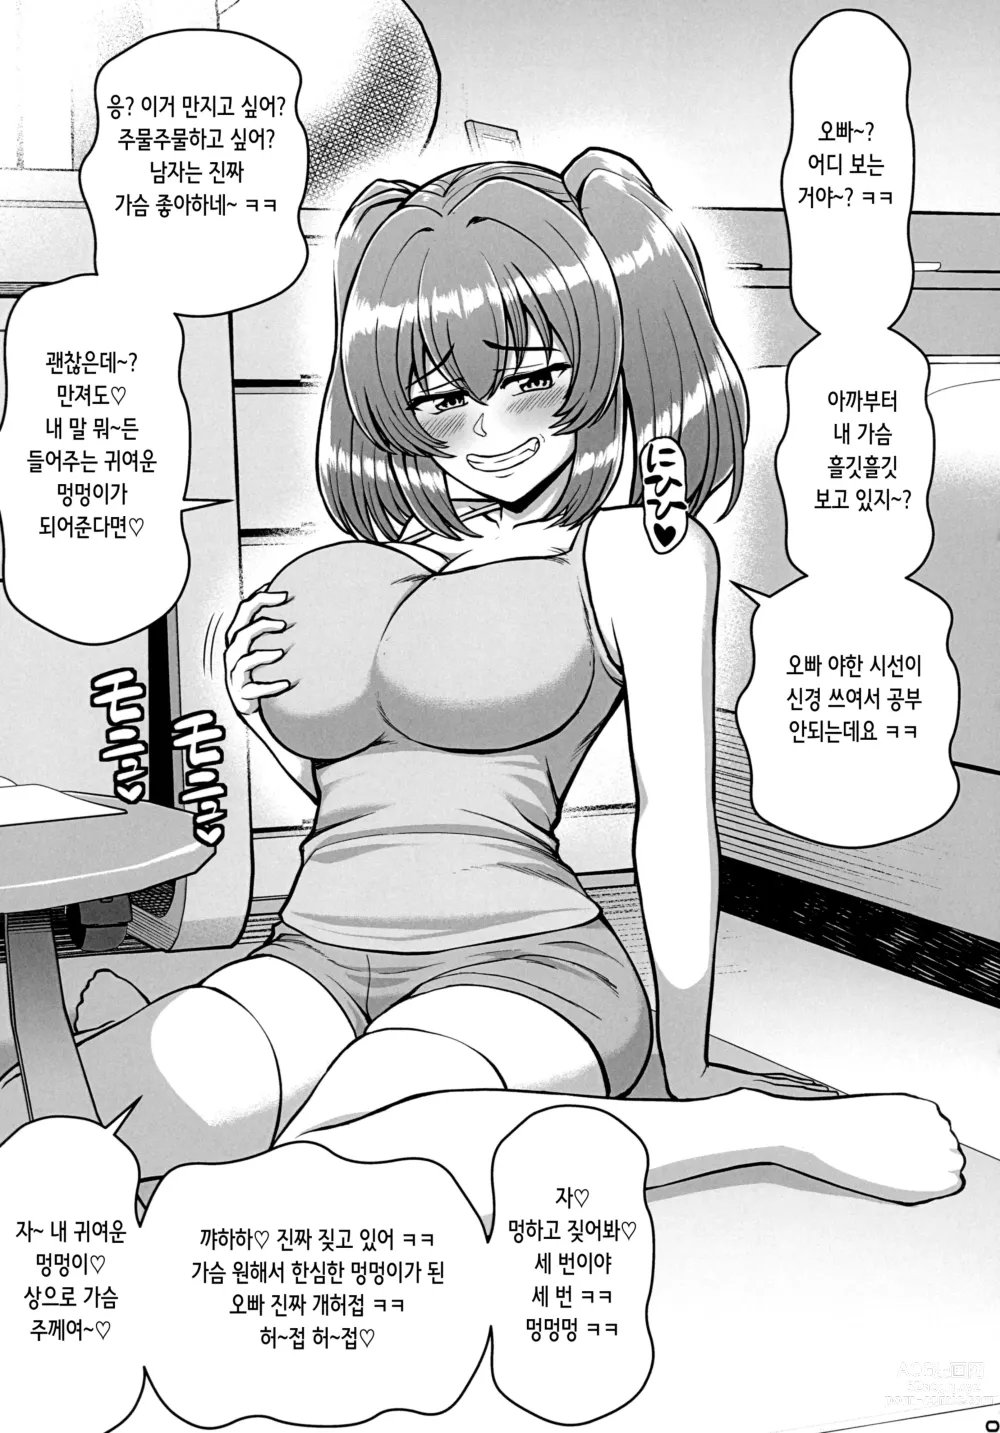 Page 5 of doujinshi 가족끼리 친하게 지내는 옆집의 개건방진 암컷 꼬맹이가 나를 집요하게 도발해와서 더는 참을 수 없다